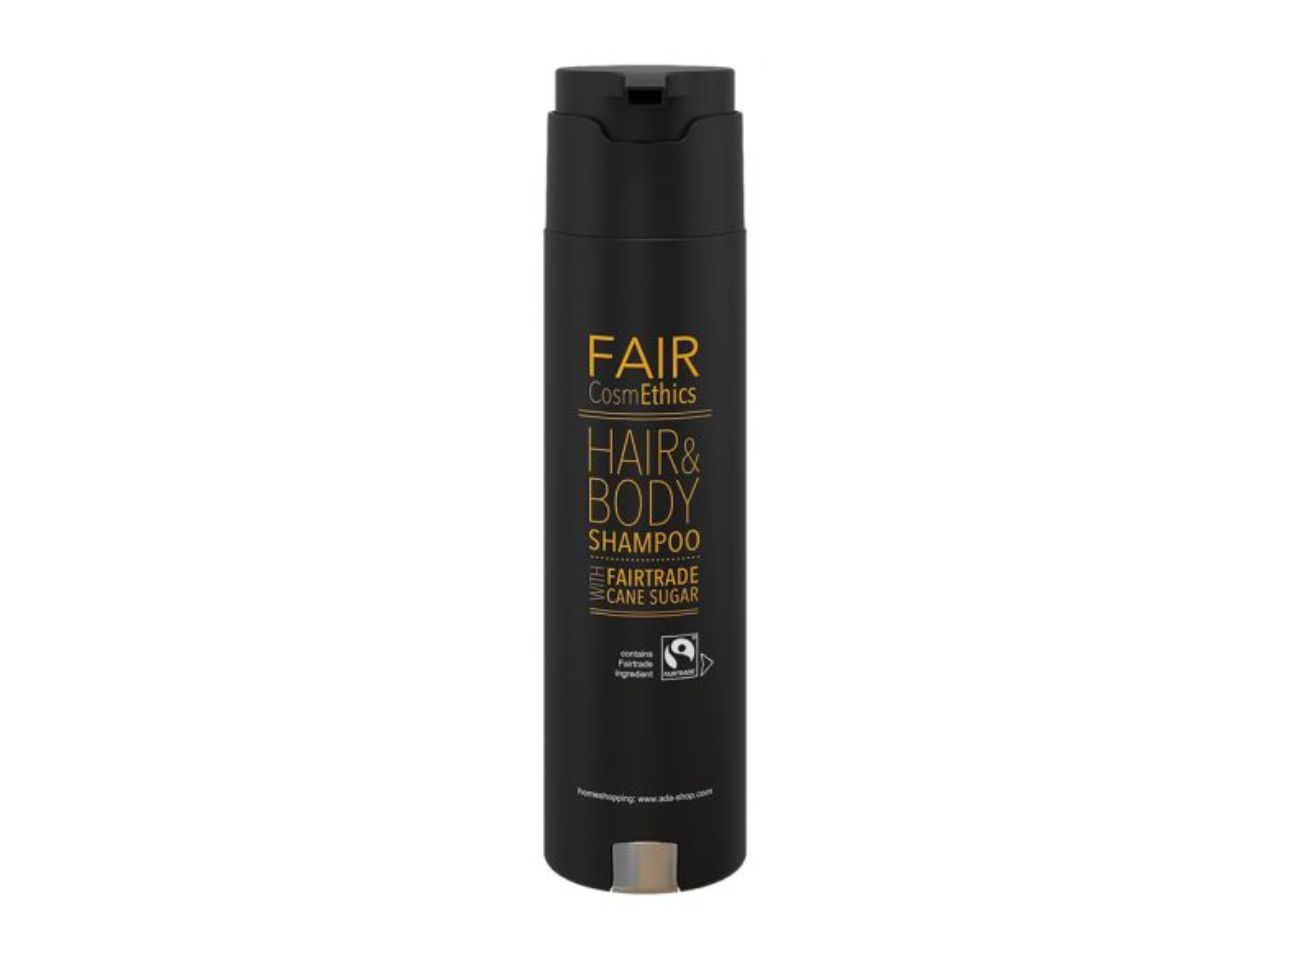 FAIR CosmEthics - Haar- und Body-Shampoo im SHAPE-Spender, 300 ml